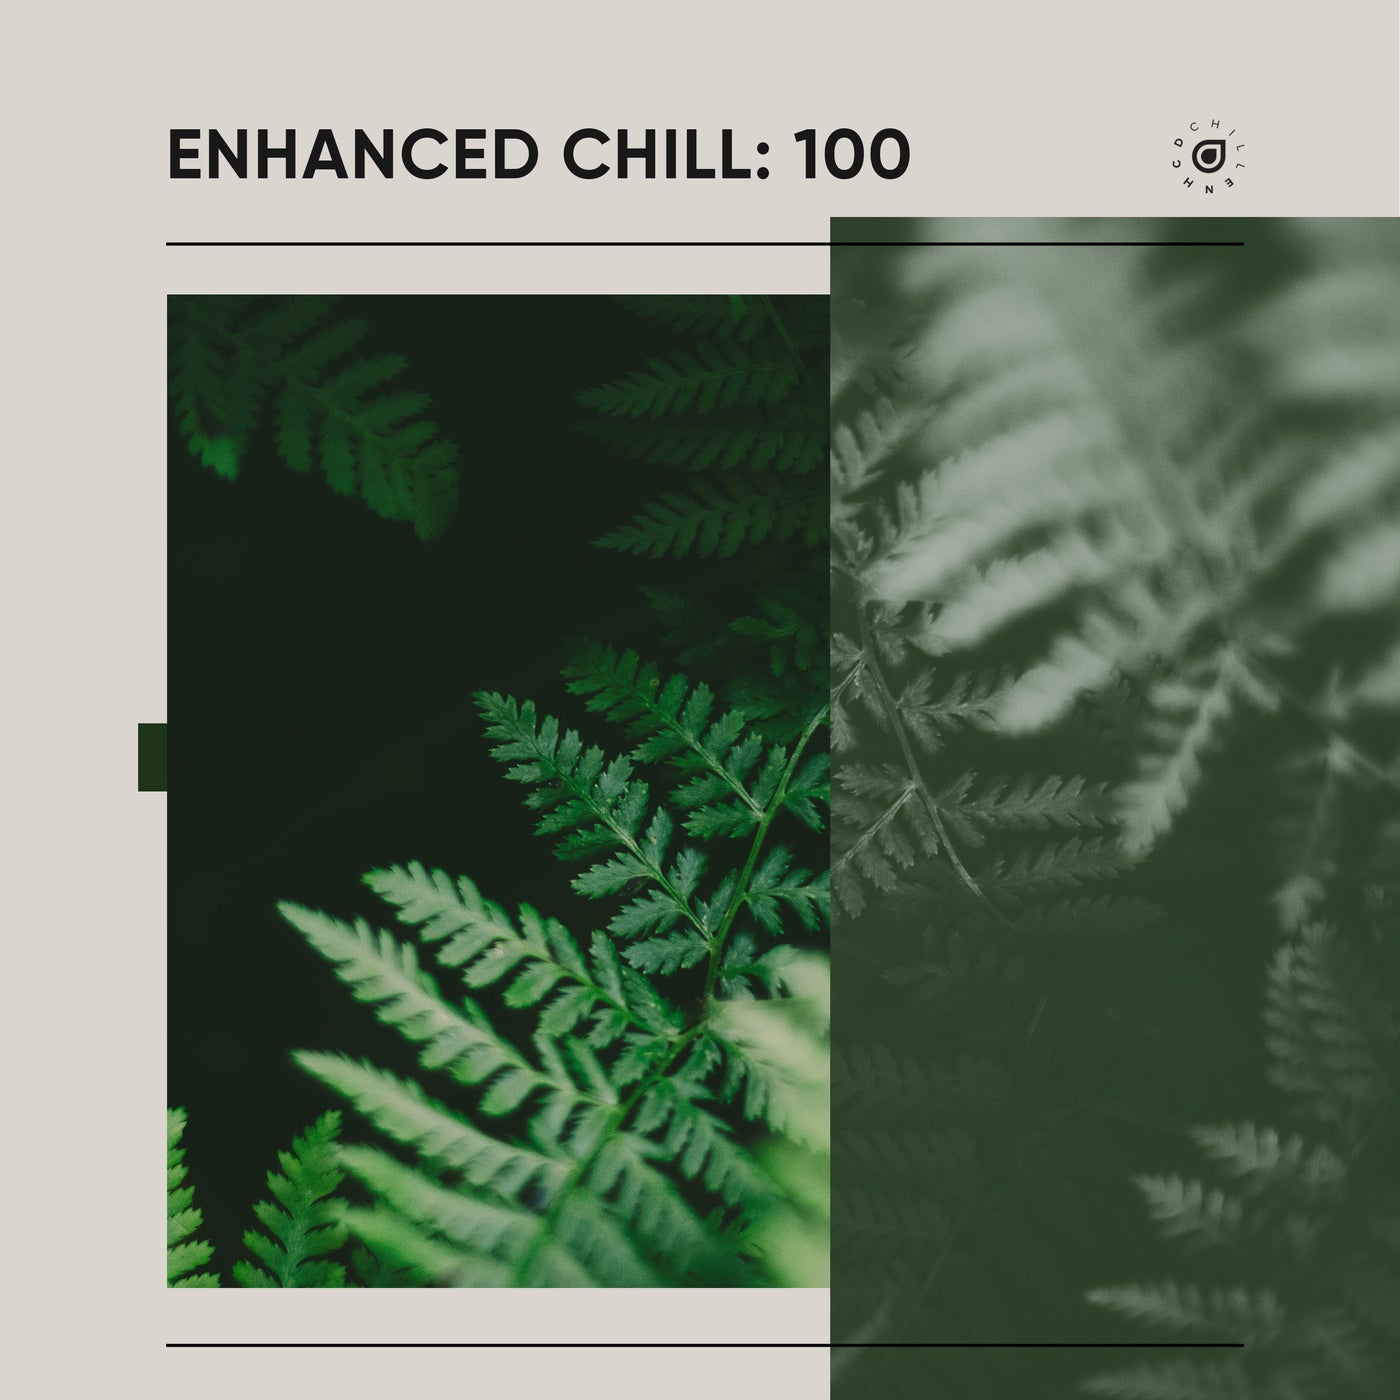 Enhanced Chill: 100